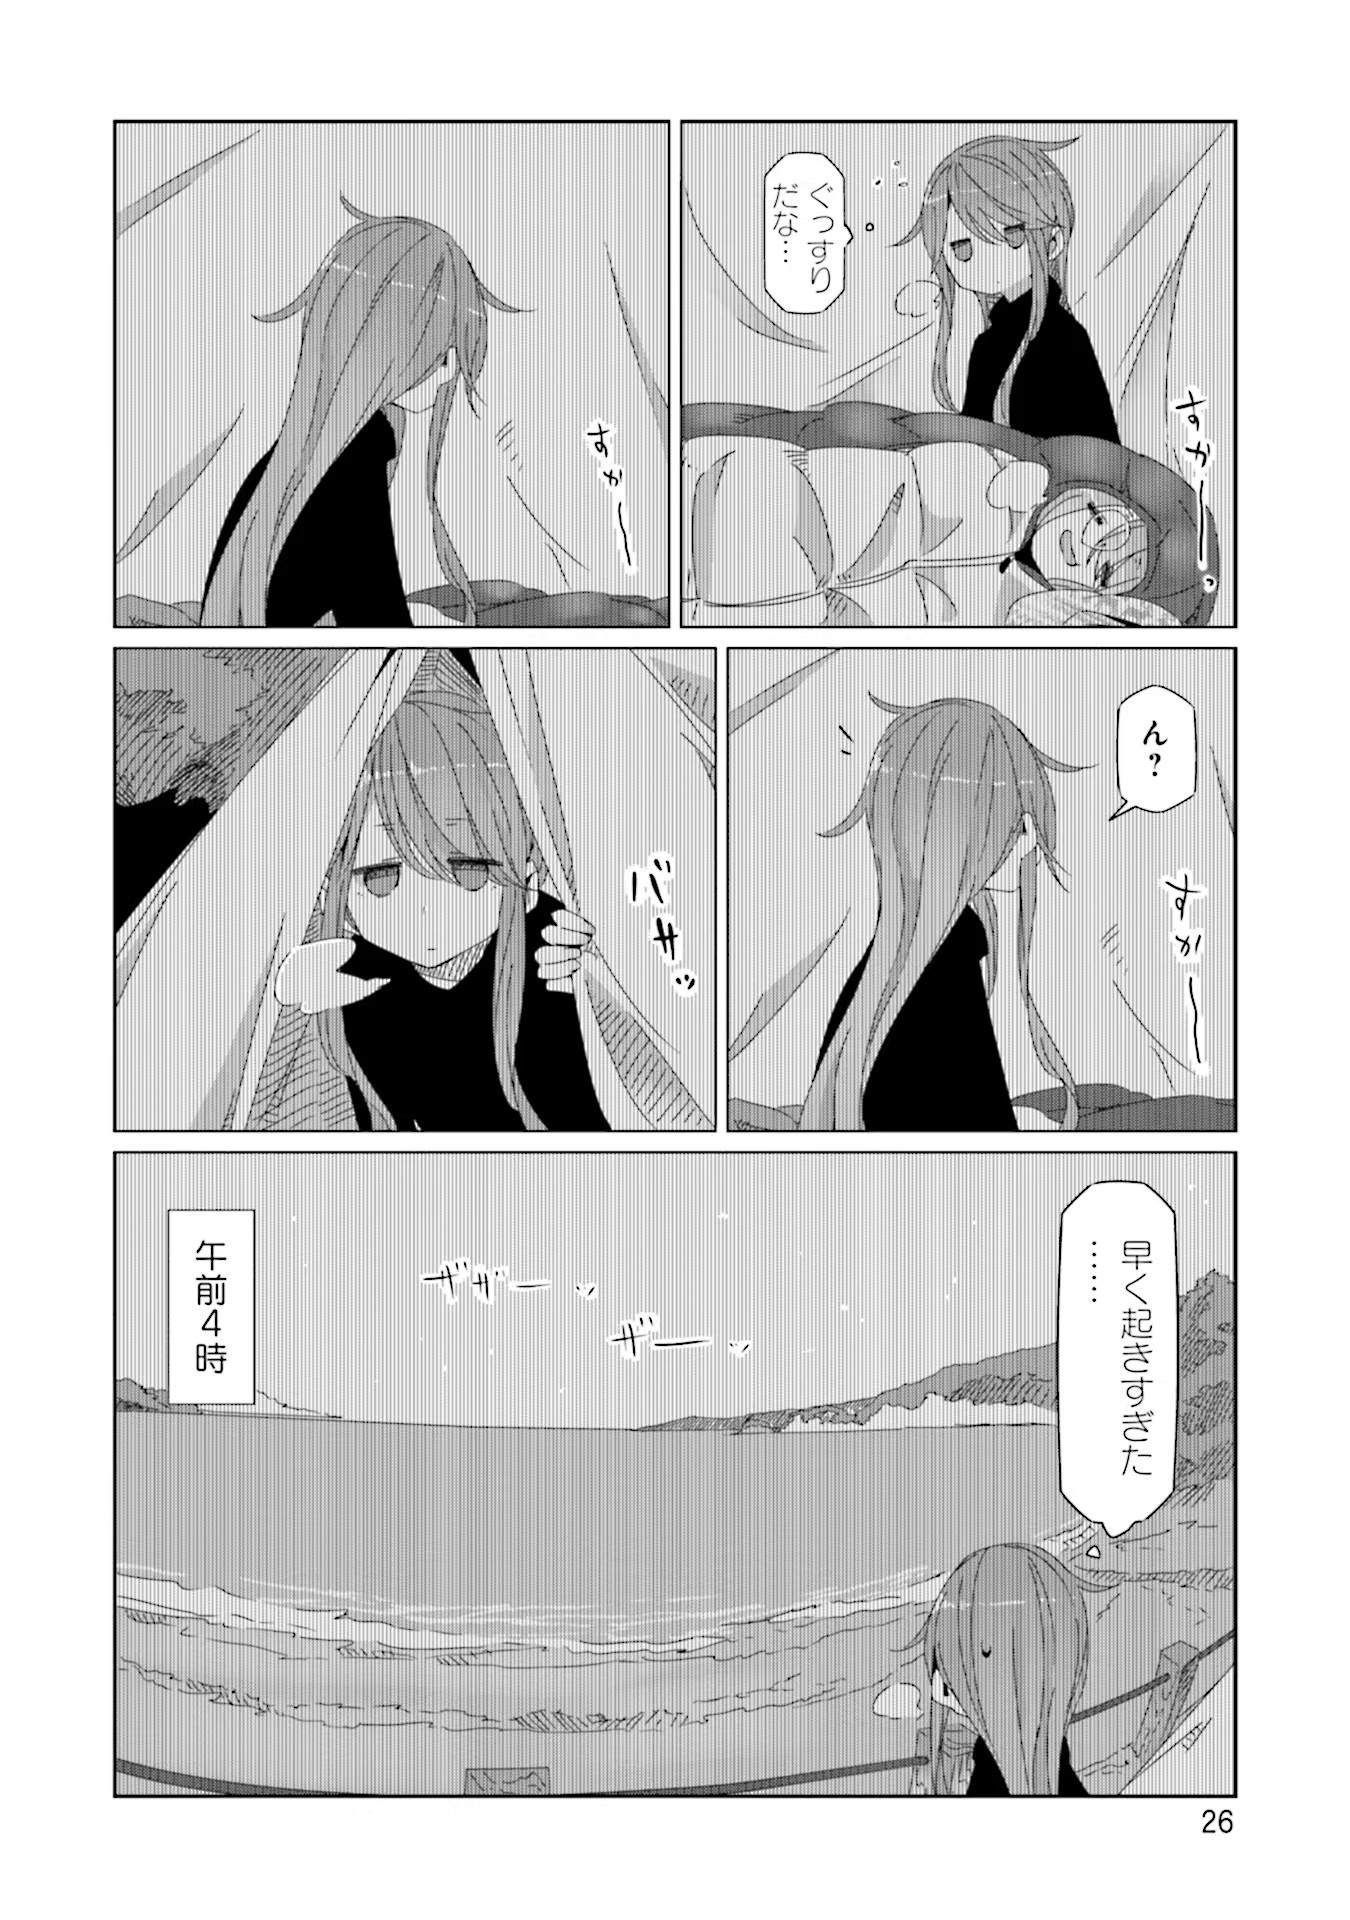 Yuru Camp - Chapter 47 - Page 28